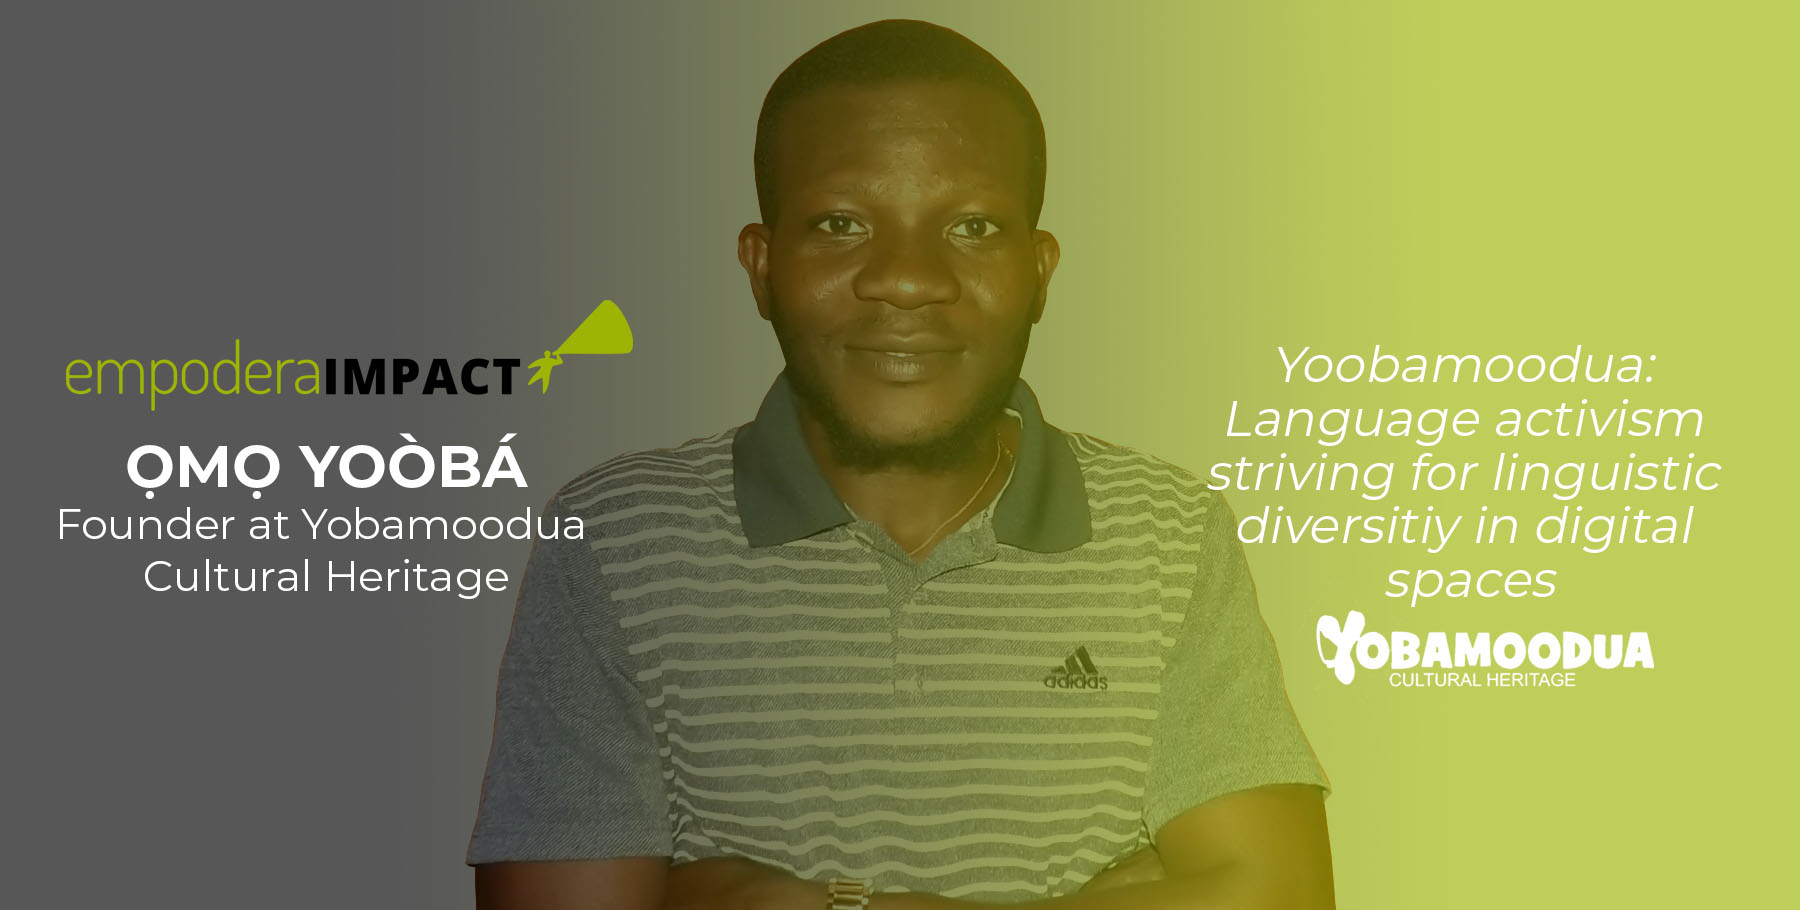 Yoobamoodua: Language activism striving for linguistic diversity in digital spaces